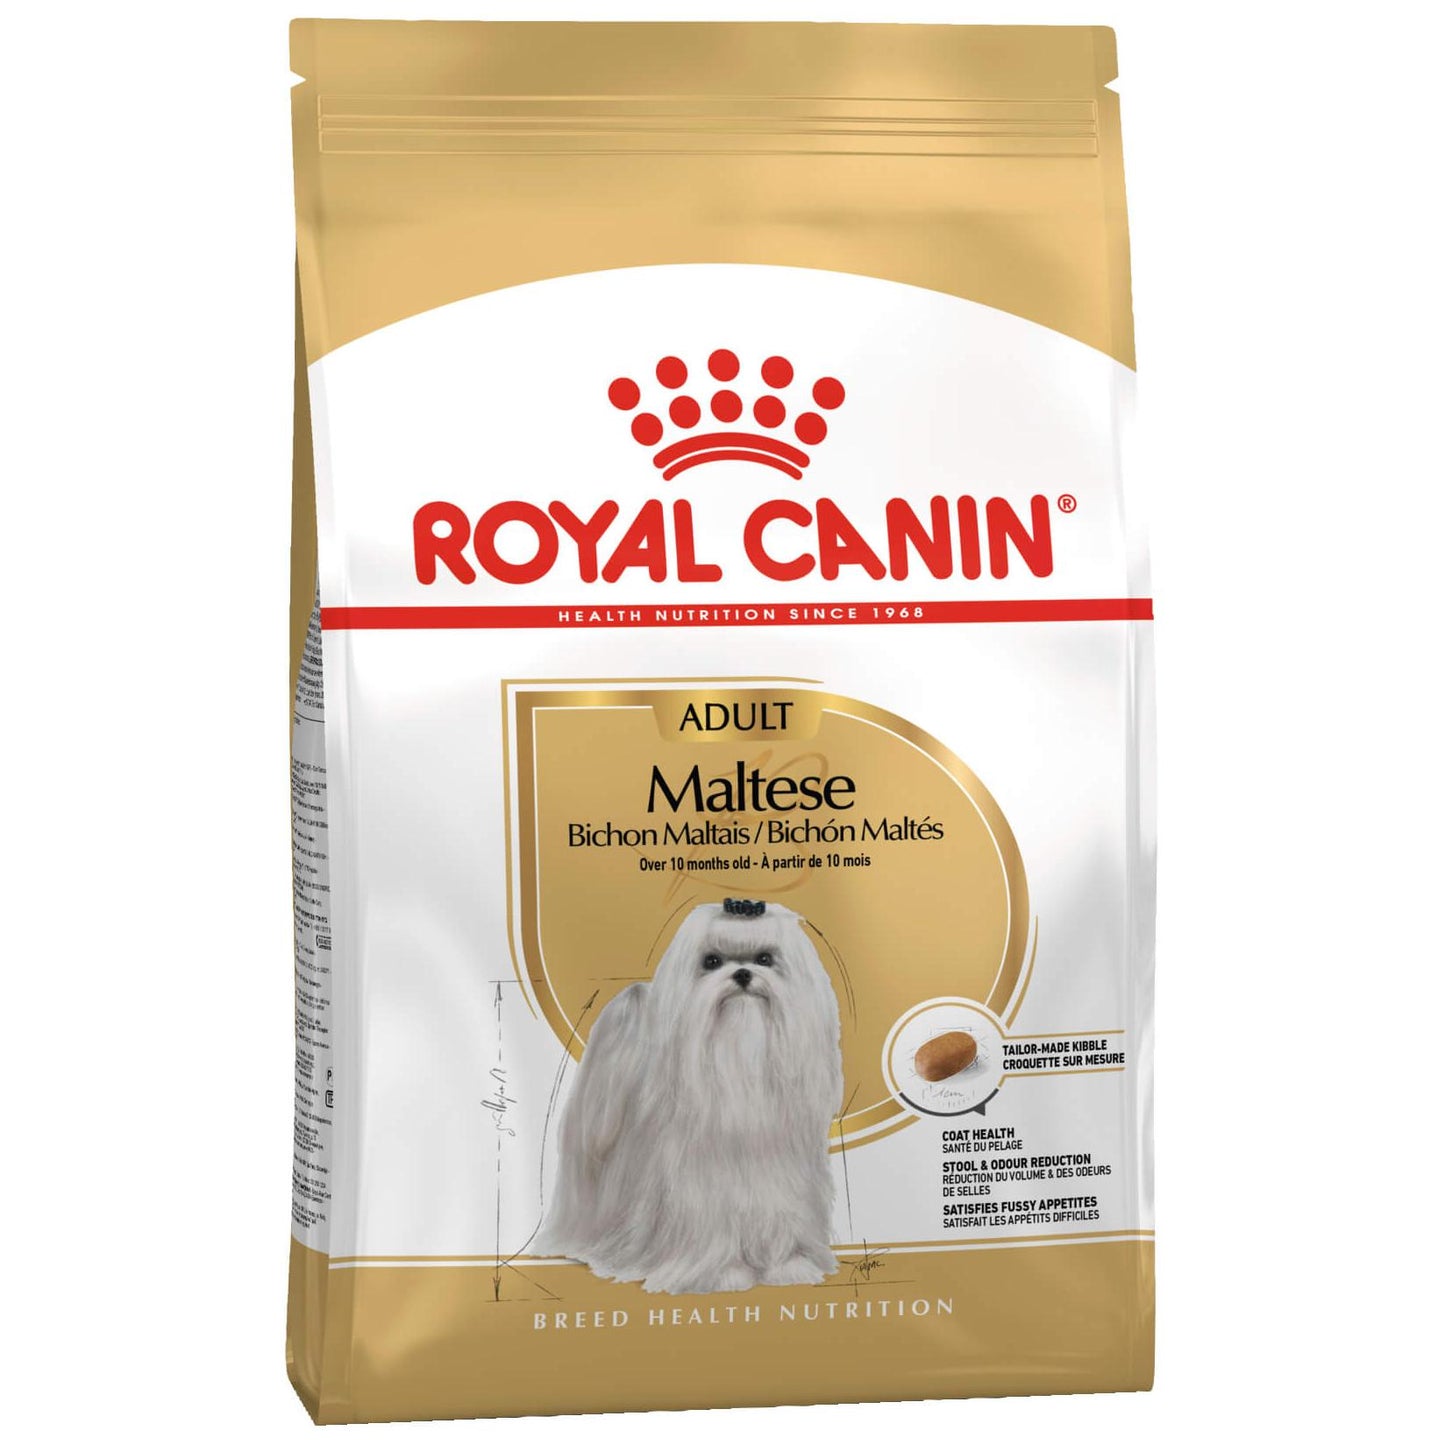 Royal Canin Maltese Dry Dog Food